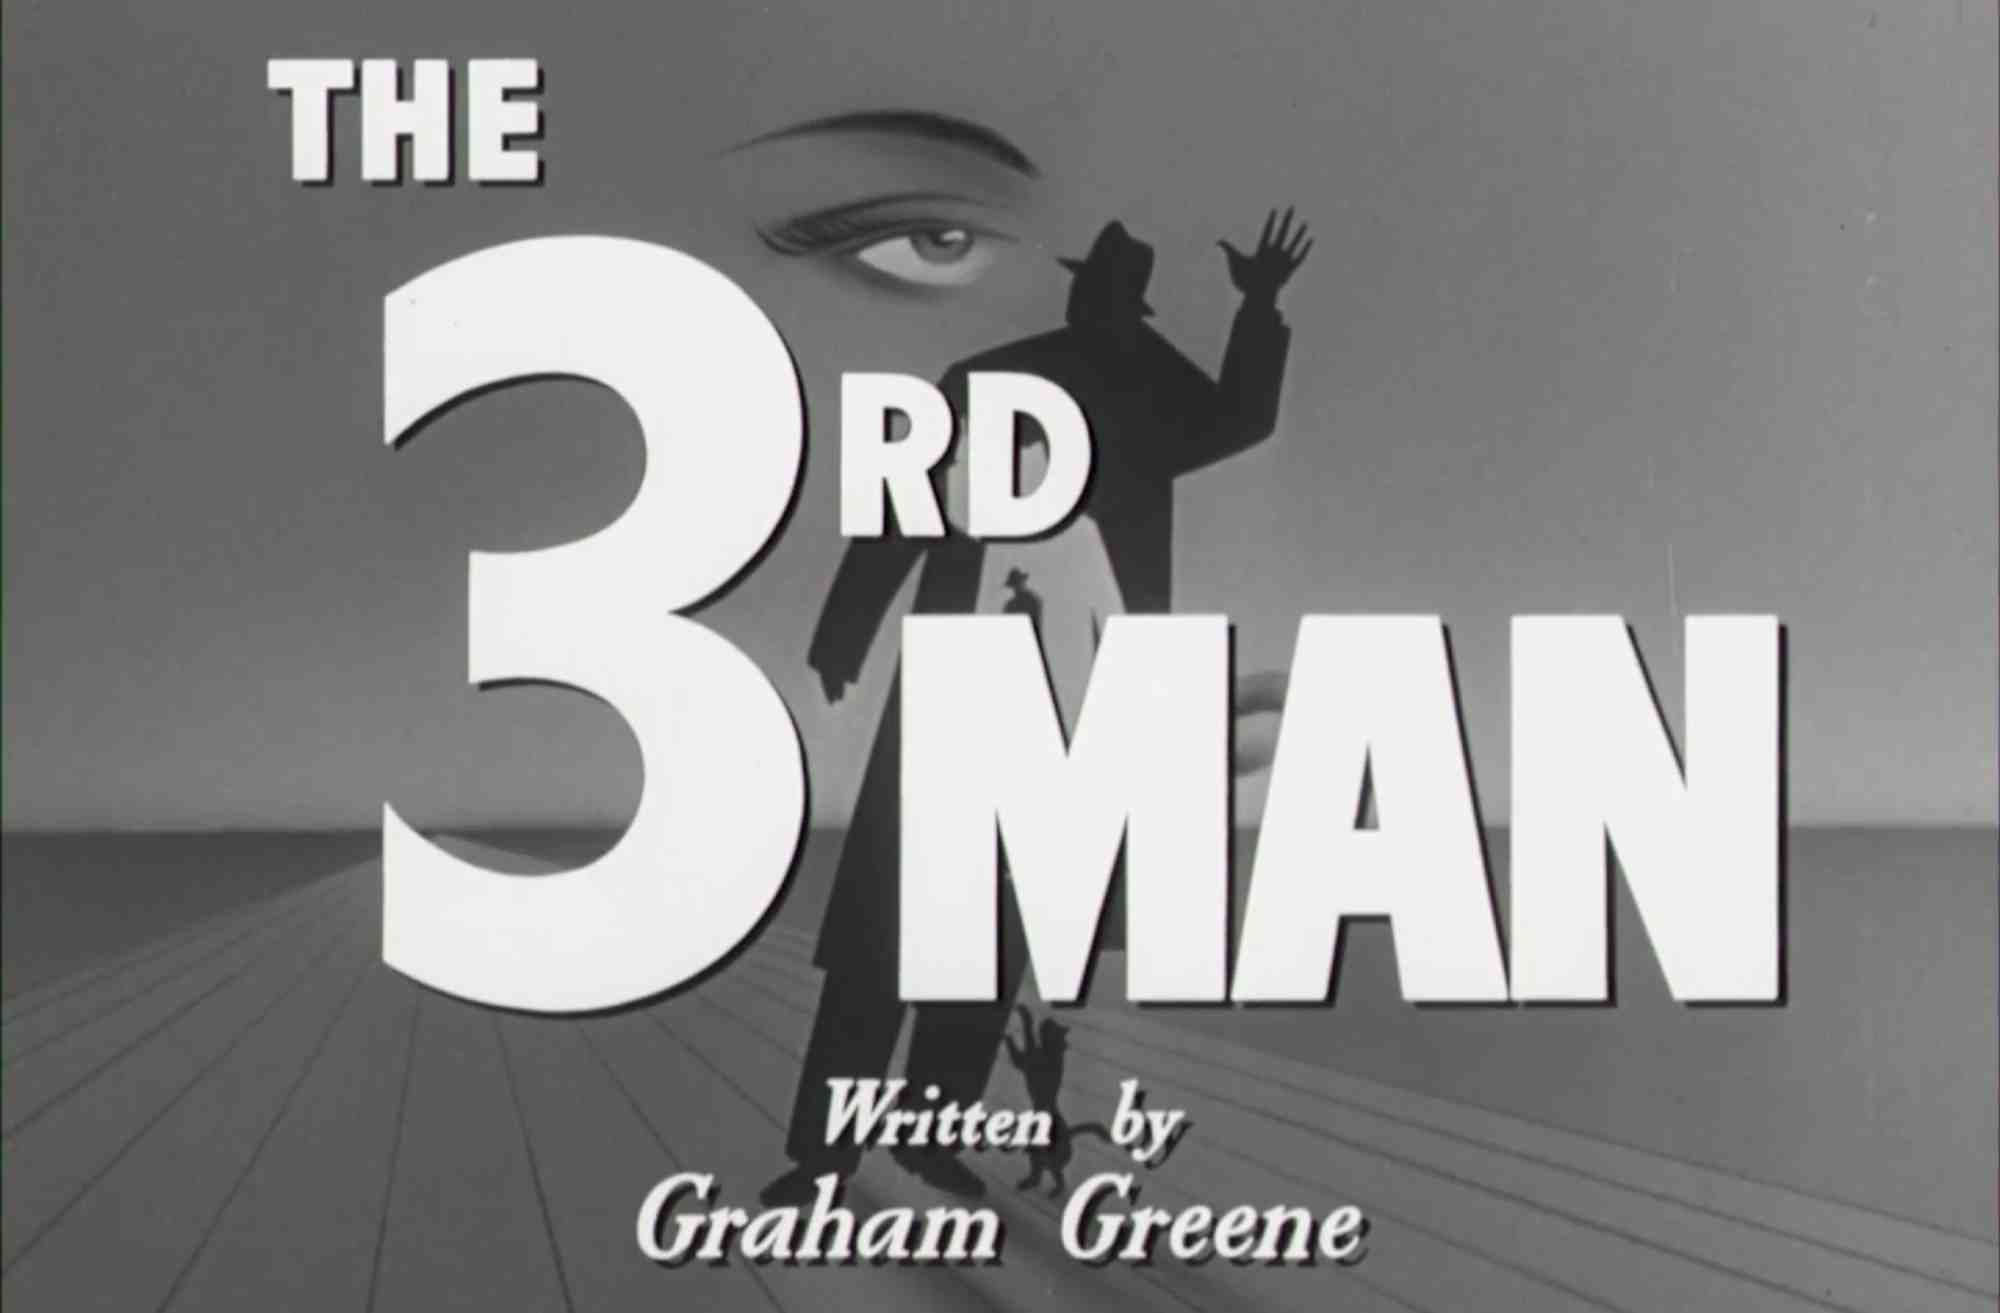 Filmstill aus dem Trailer des Films „Der Dritte Mann“